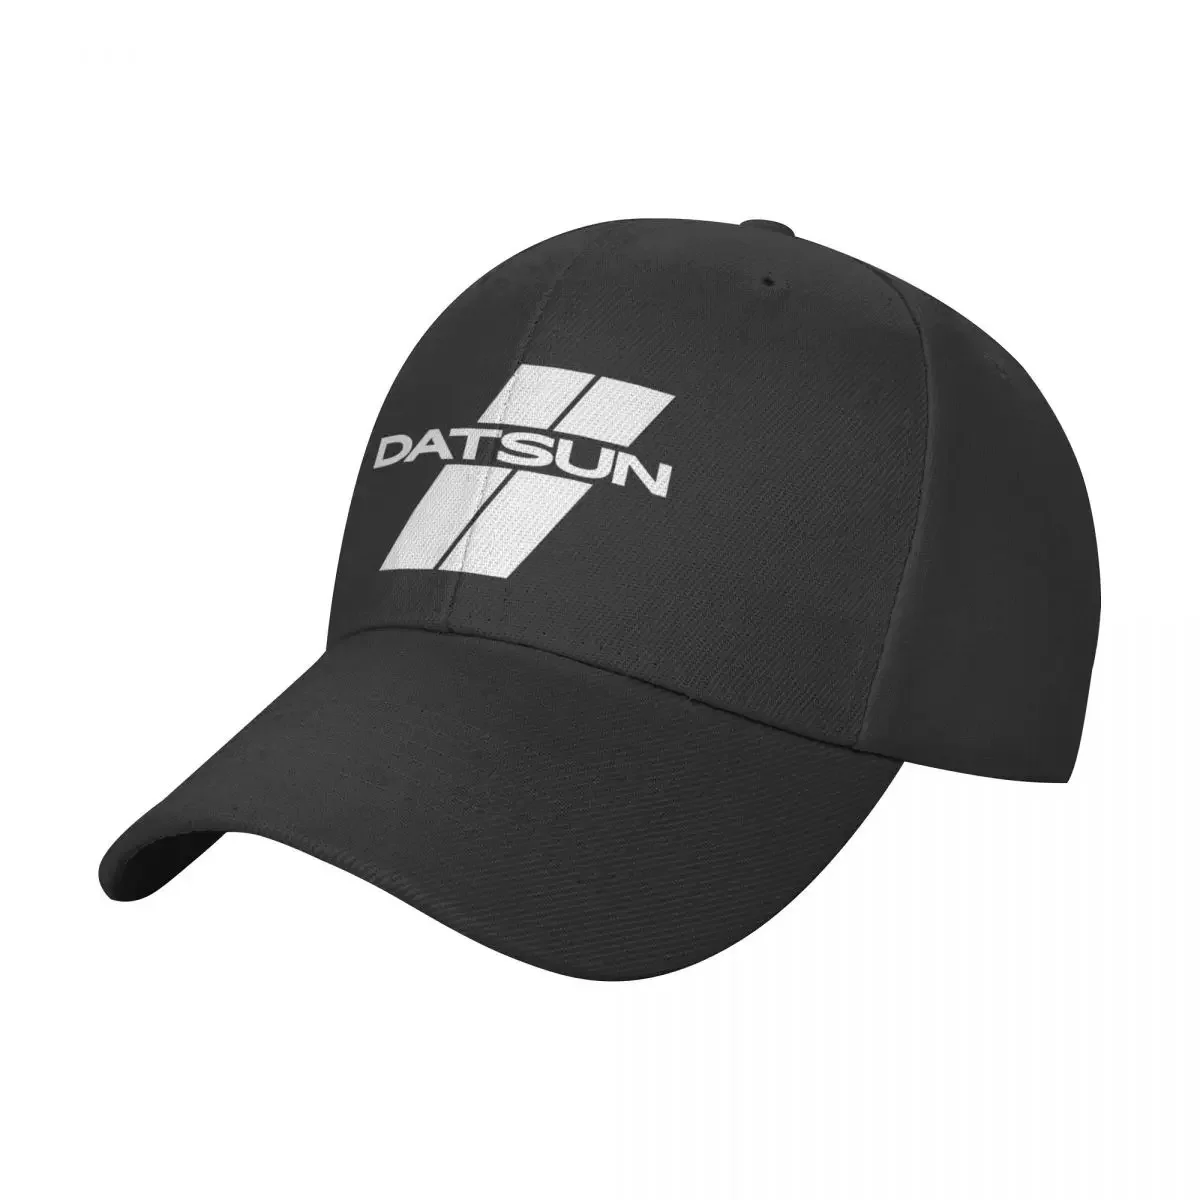 

Datsun Stripes (White) Baseball Cap |-F-| Luxury Man Hat Military Tactical Cap Hats Man Women's